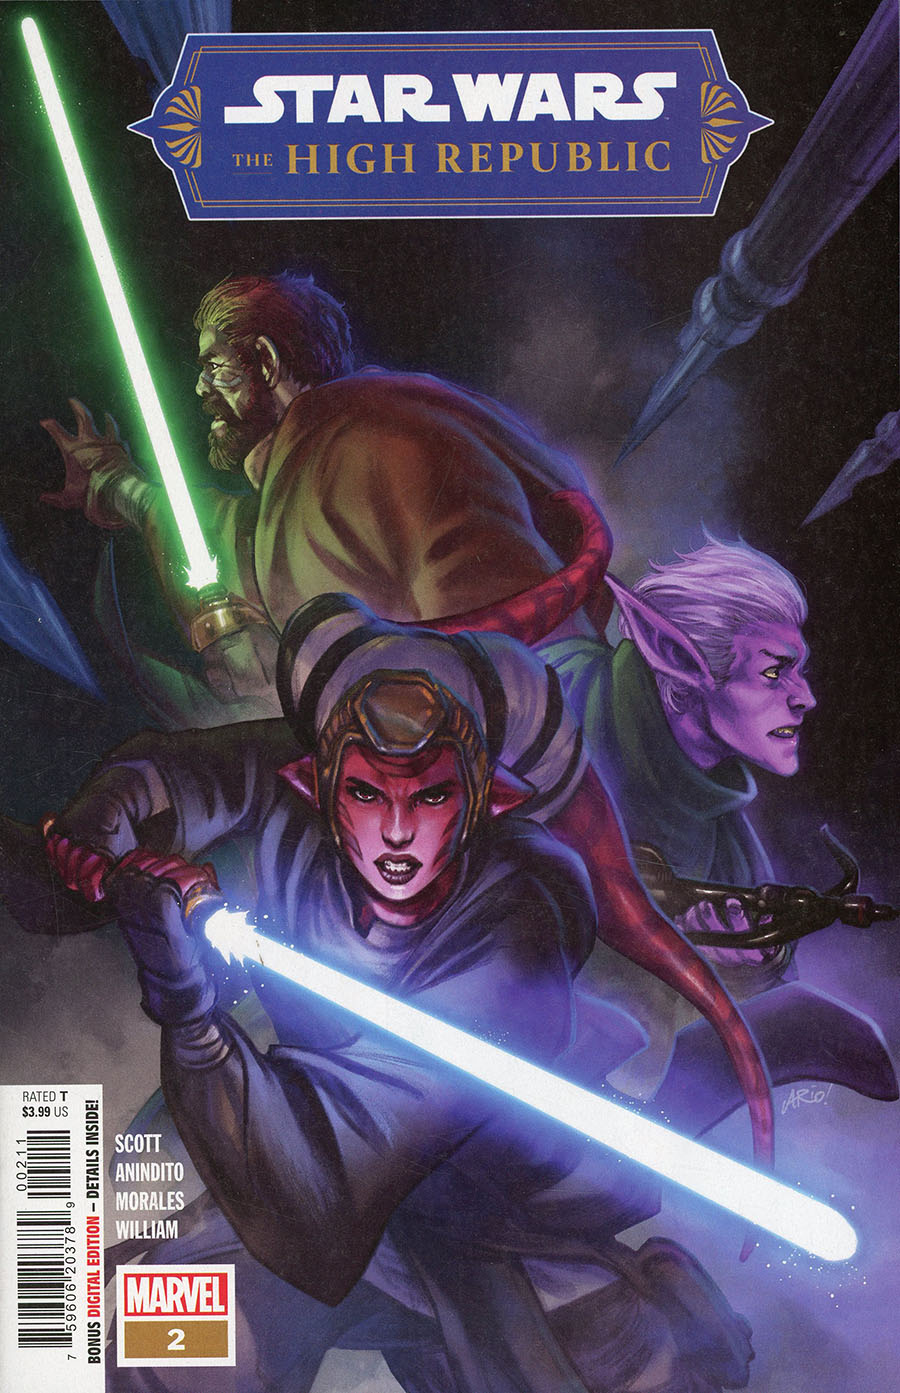 Star Wars The High Republic Vol 2 #2 Cover A Regular Ario Anindito Cover